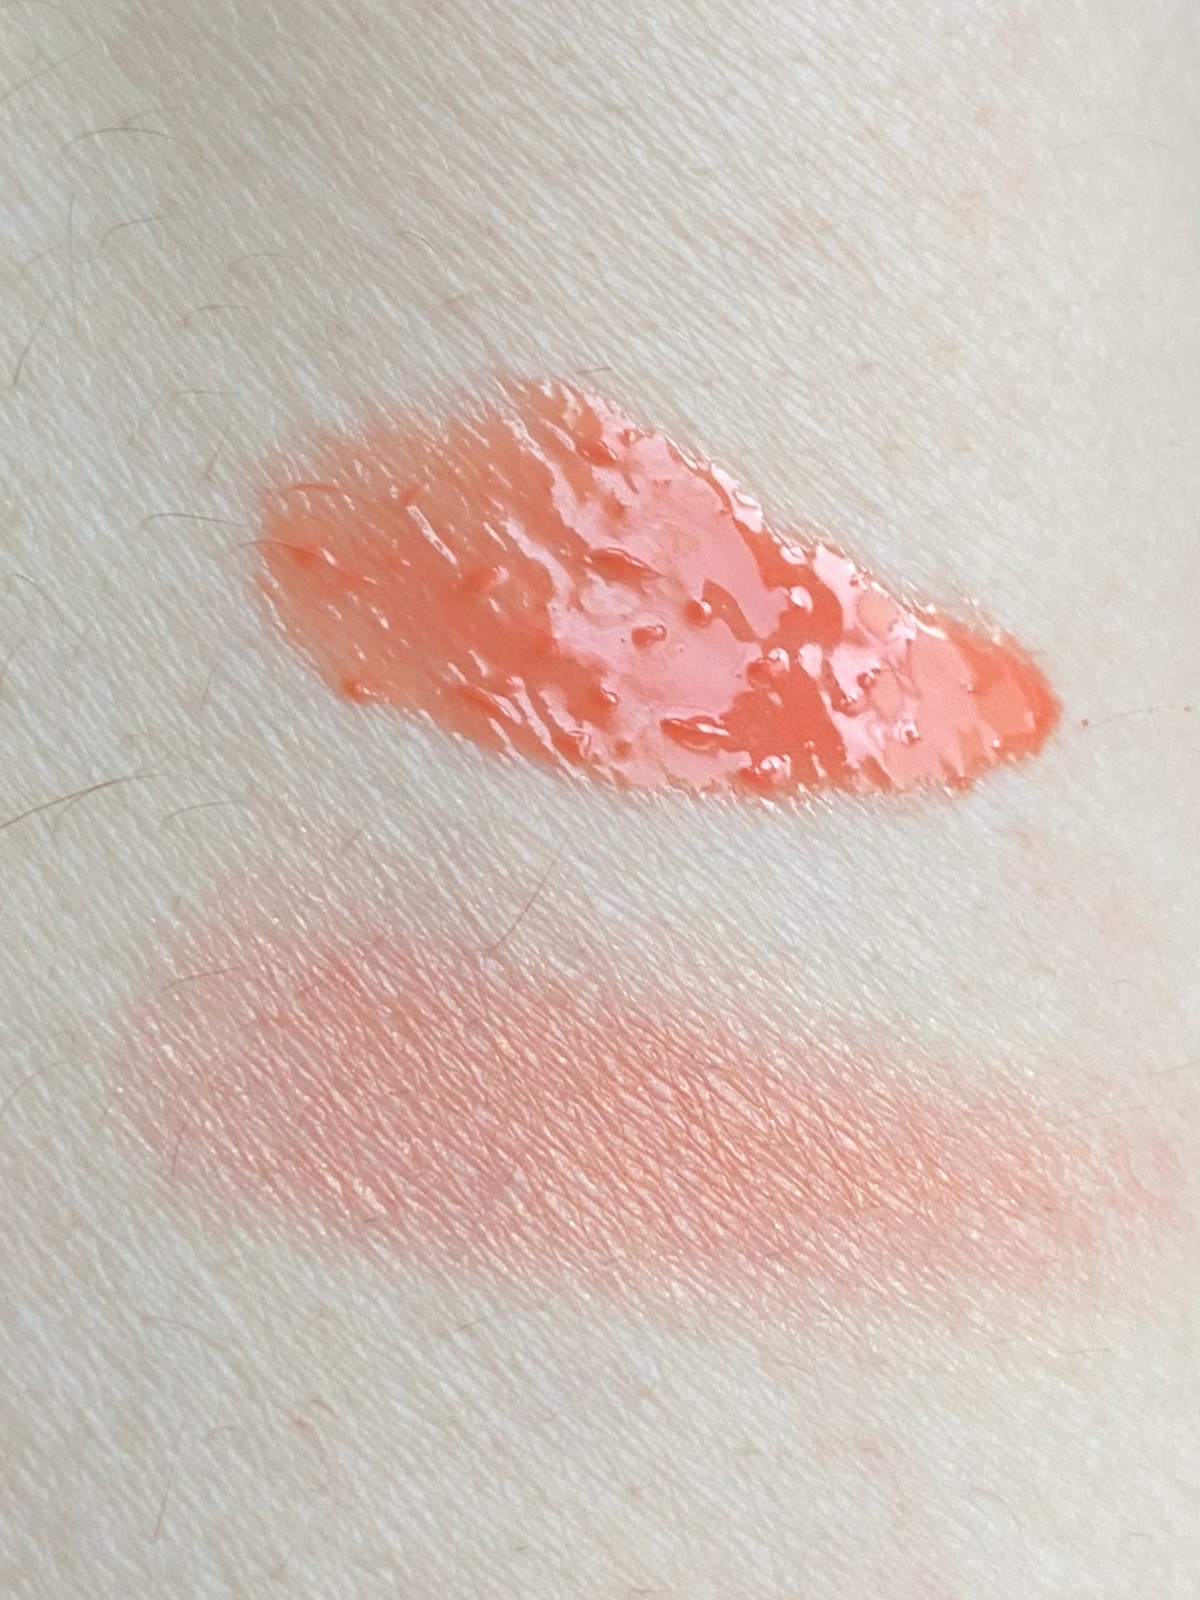 Fenty Beauty Cheeks Out Blush Peach Face Gloss Bomb Cream Peach Pout Swatch